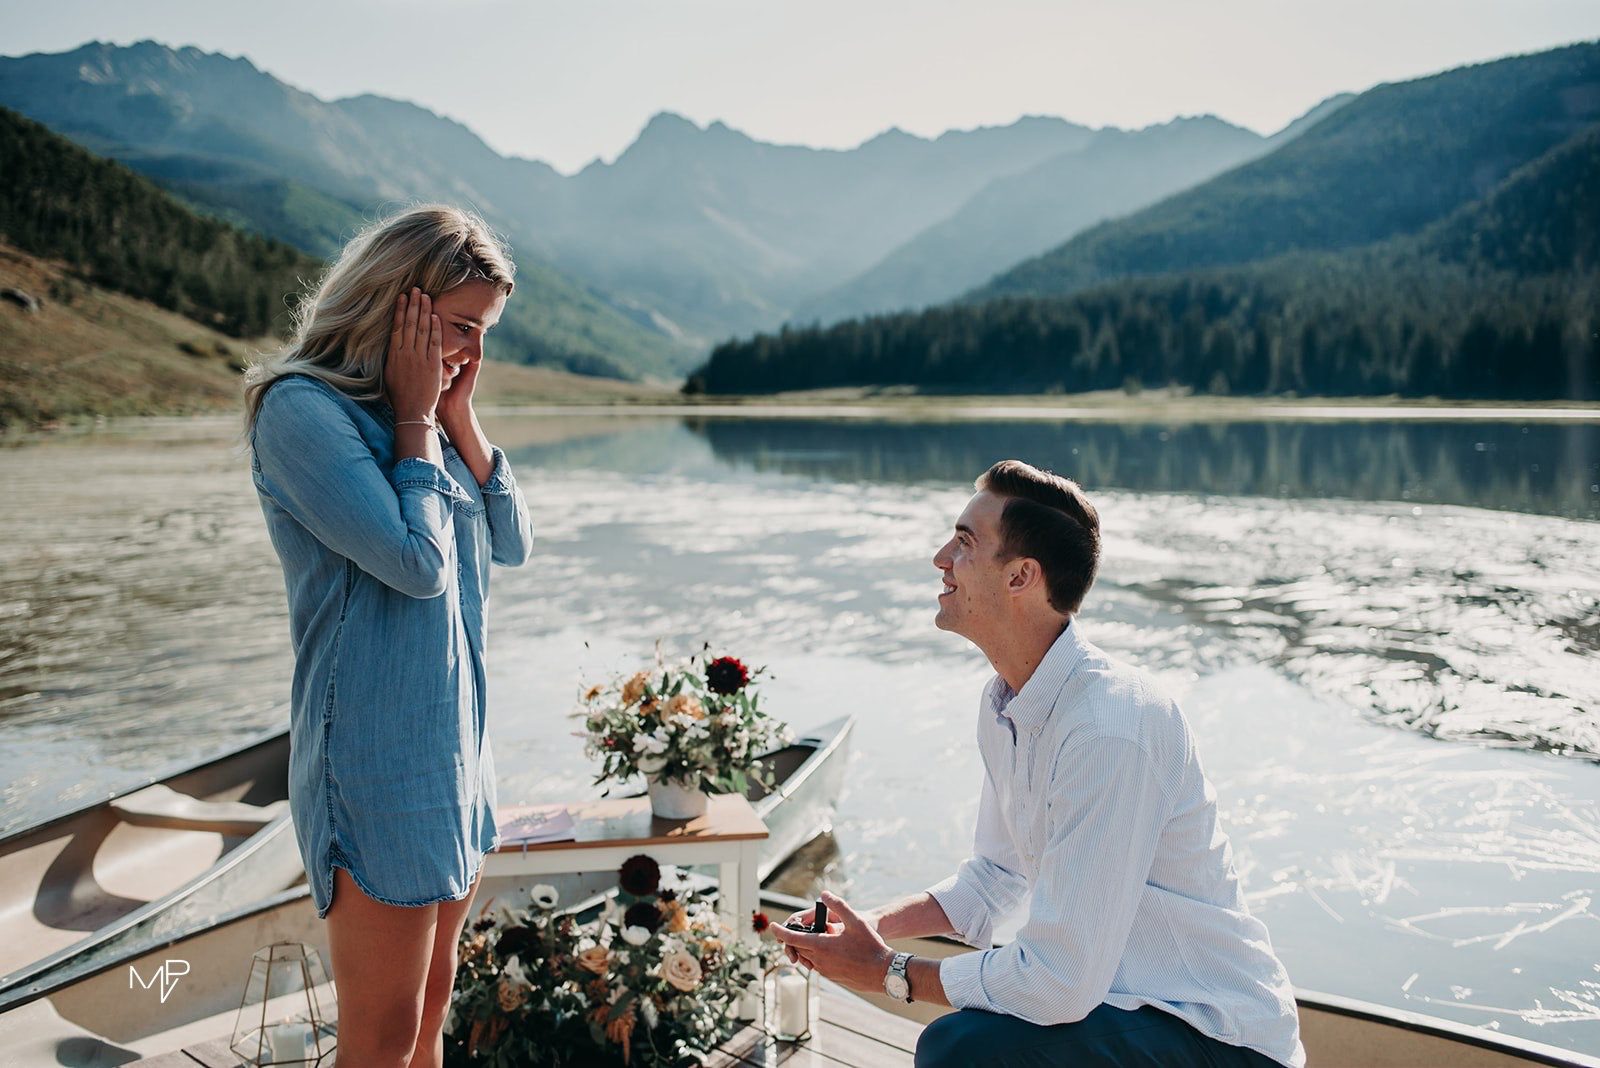 Couple getting engaged on lake